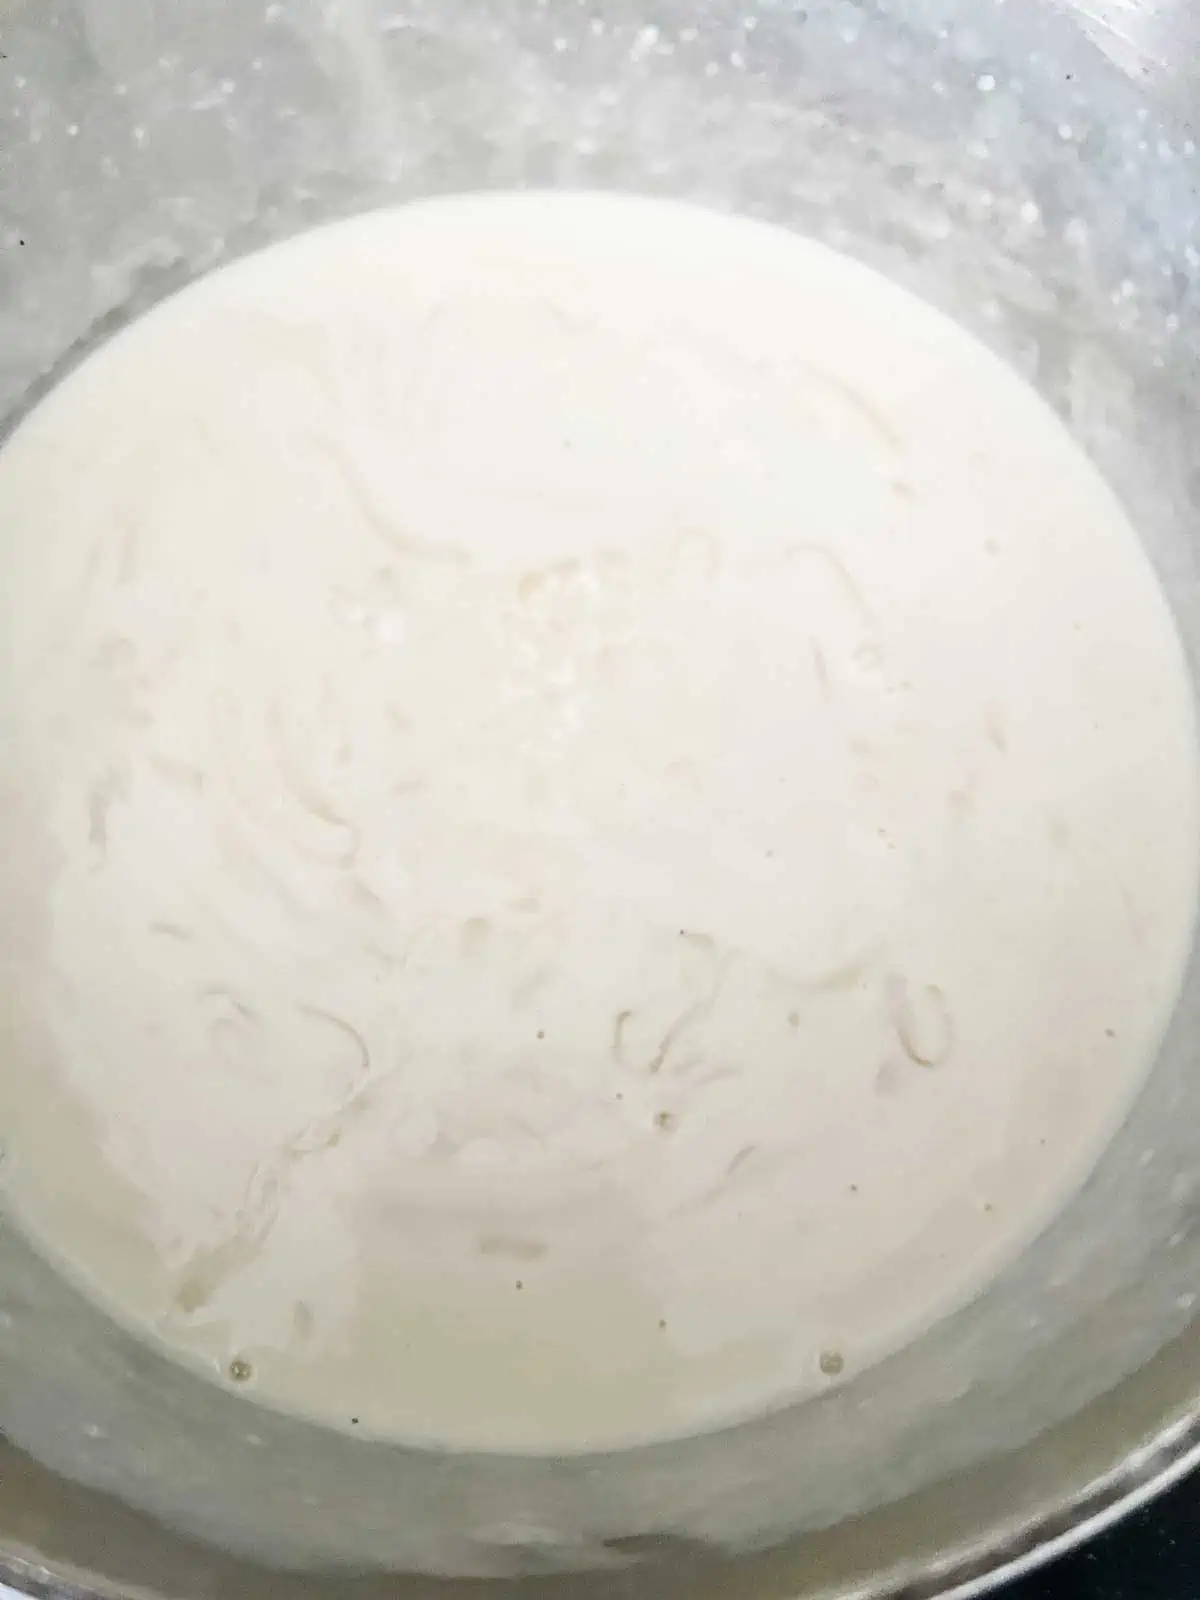 Photo of a cream sauce in a saucepan.